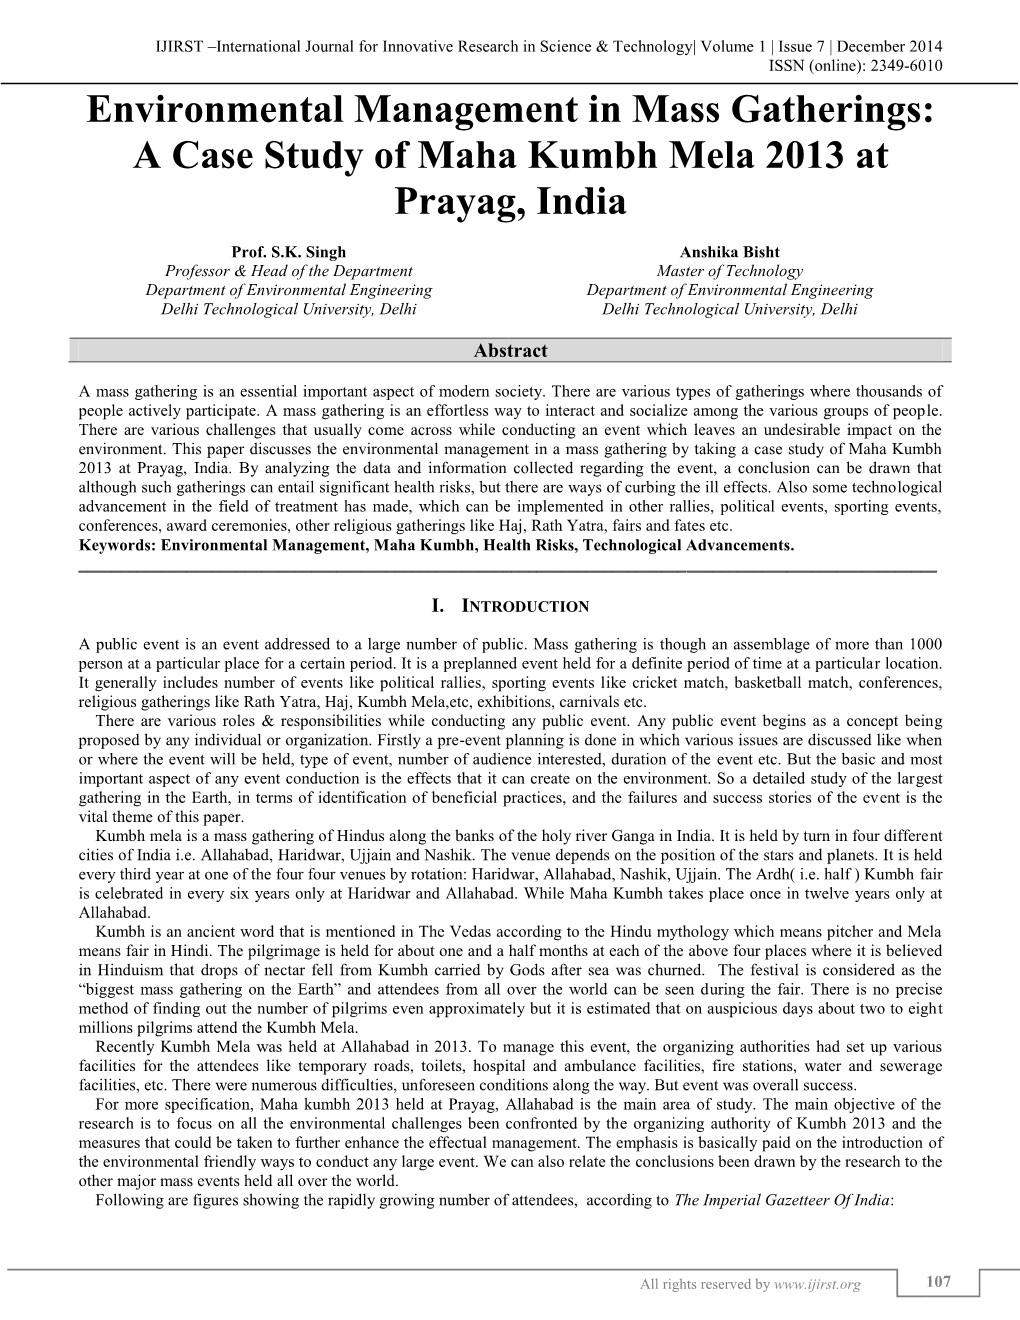 Environmental Management in Mass Gatherings: a Case Study of Maha Kumbh Mela 2013 At